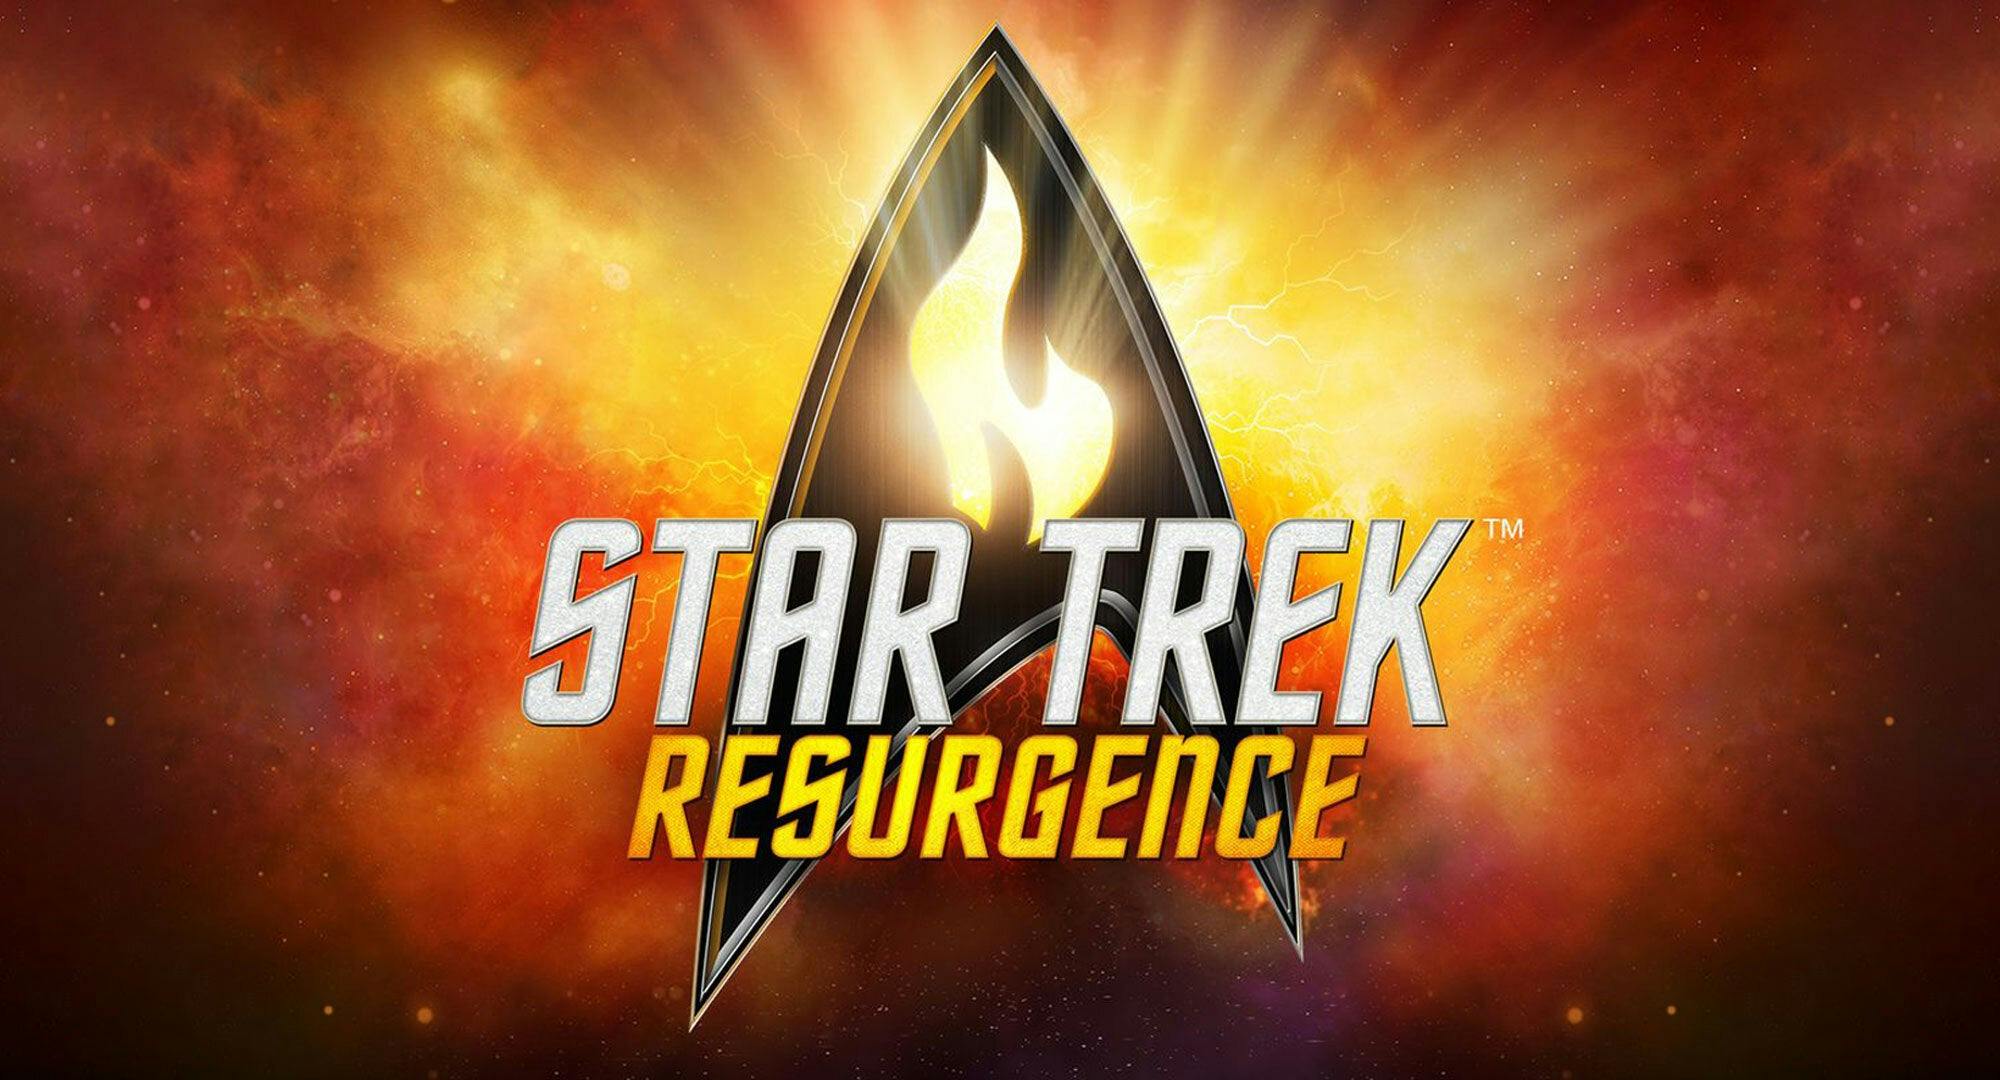 Star Trek: Resurgence game logo